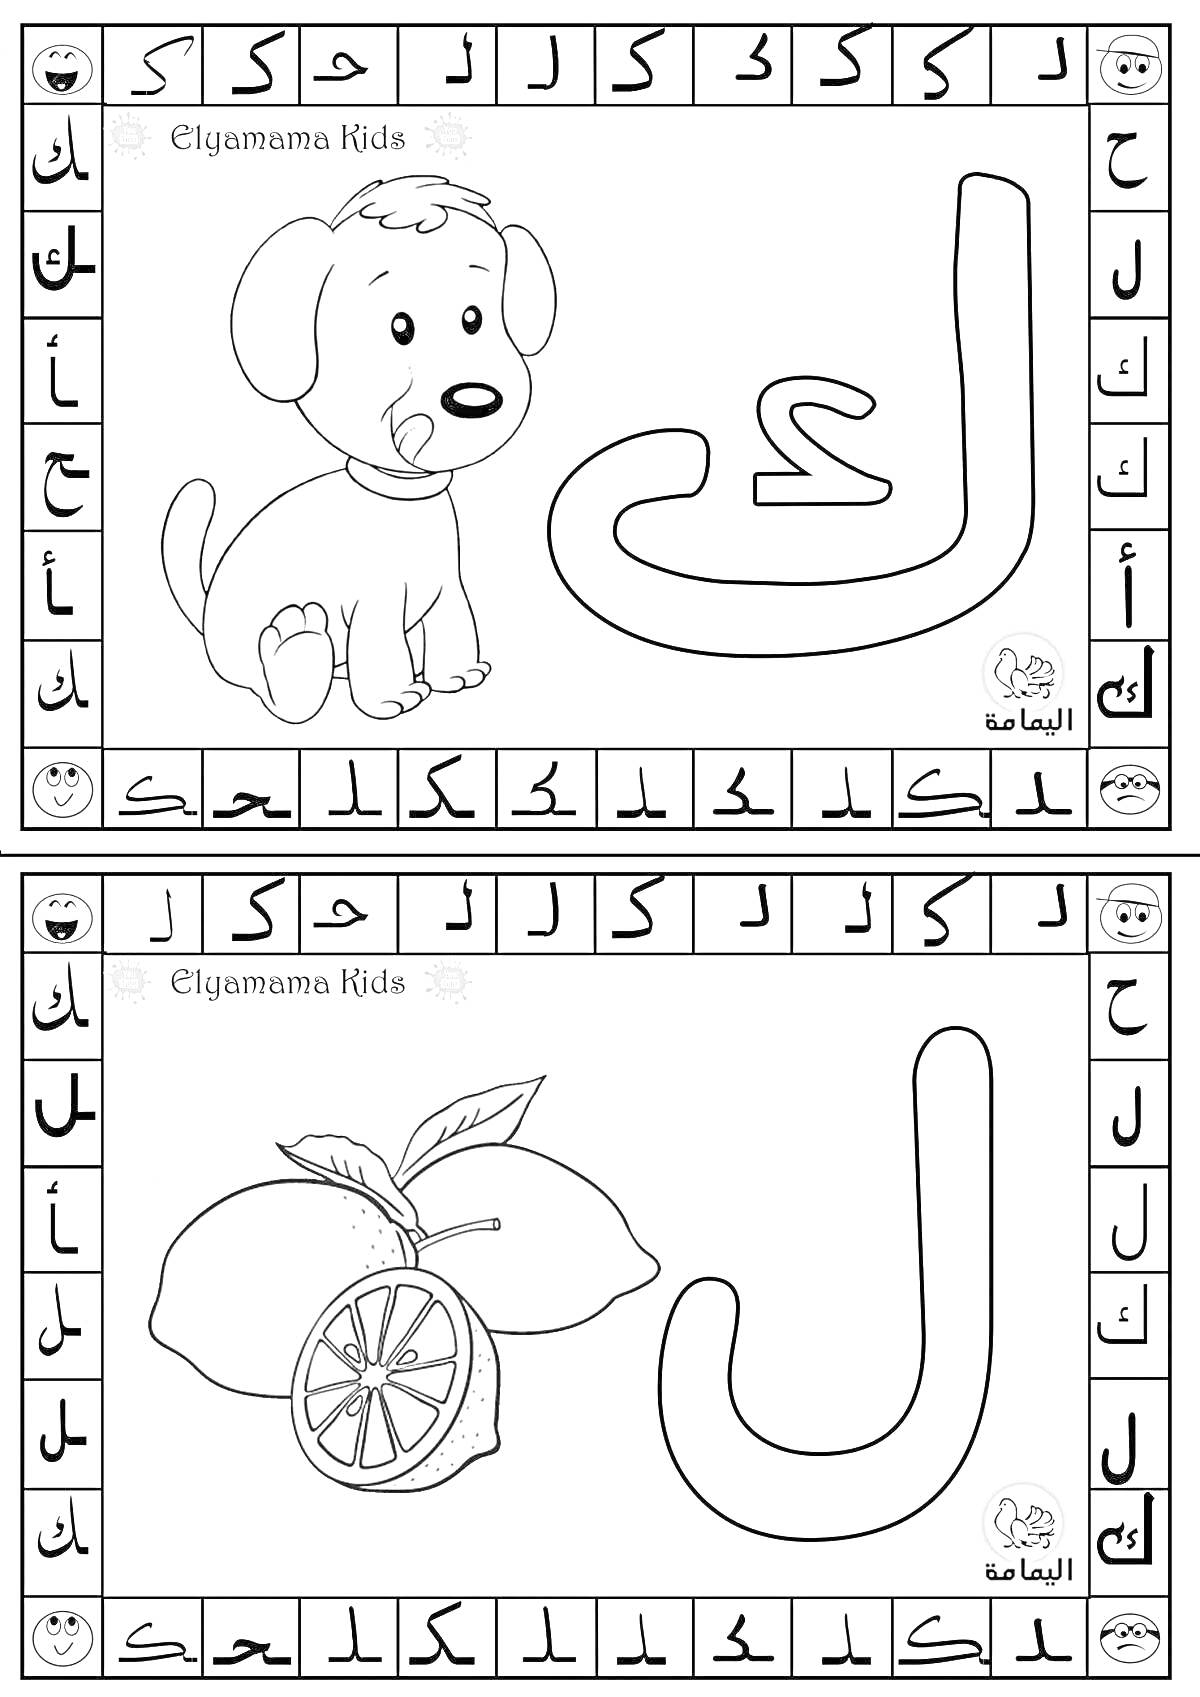 Раскраска Раскраска с арабскими буквами, собака и лимон